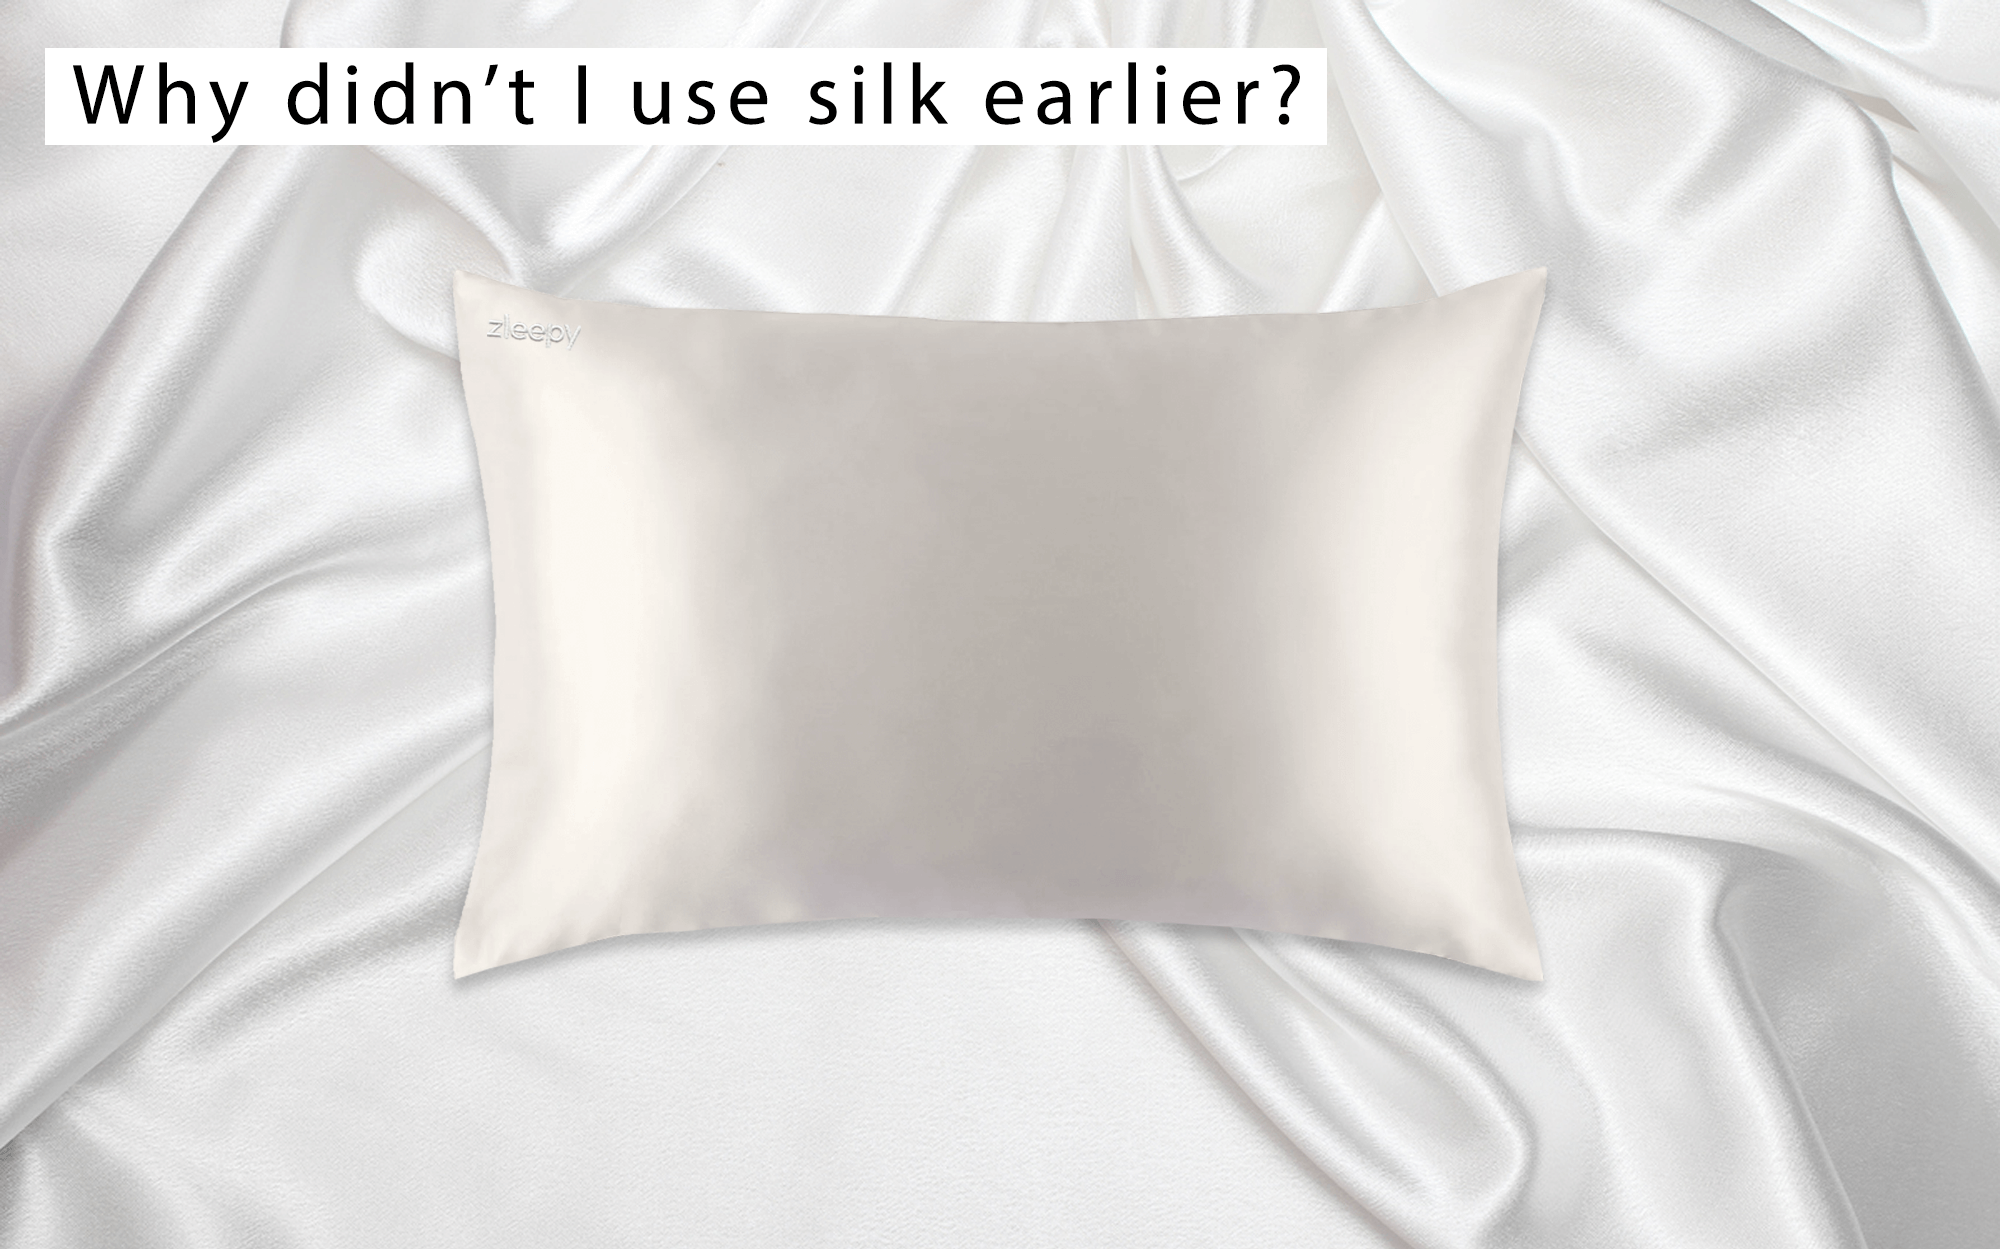 why-didnt-i-use-a-white-silk-pillowcase-earlier